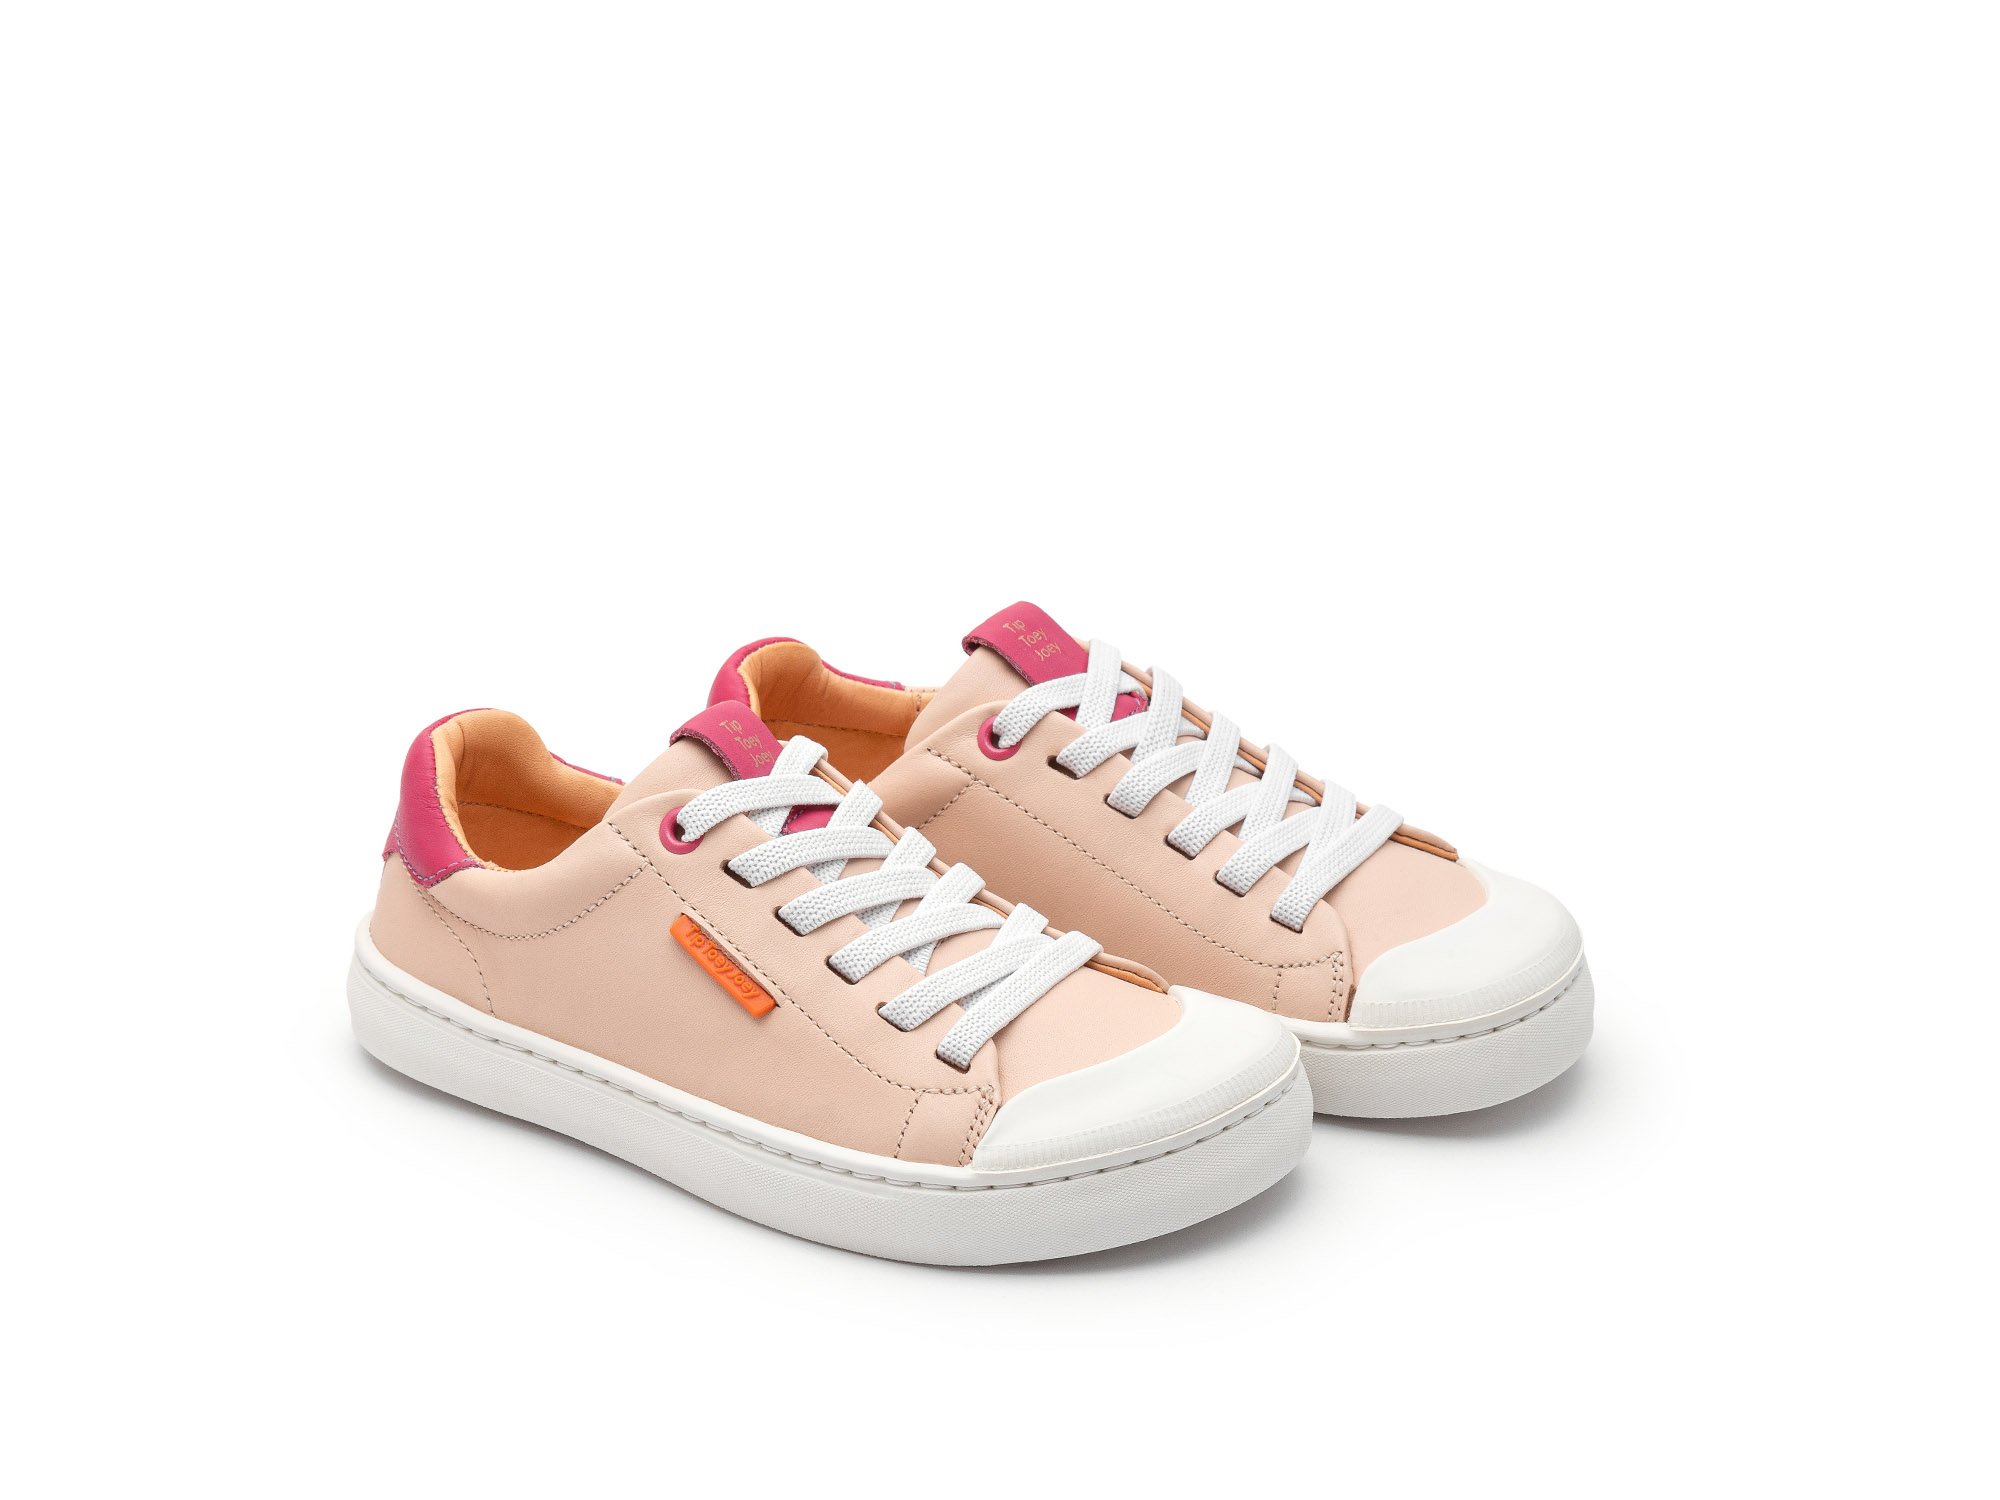 RUN & PLAY Sneakers for Girls Volt Colors | Tip Toey Joey - Australia - 0